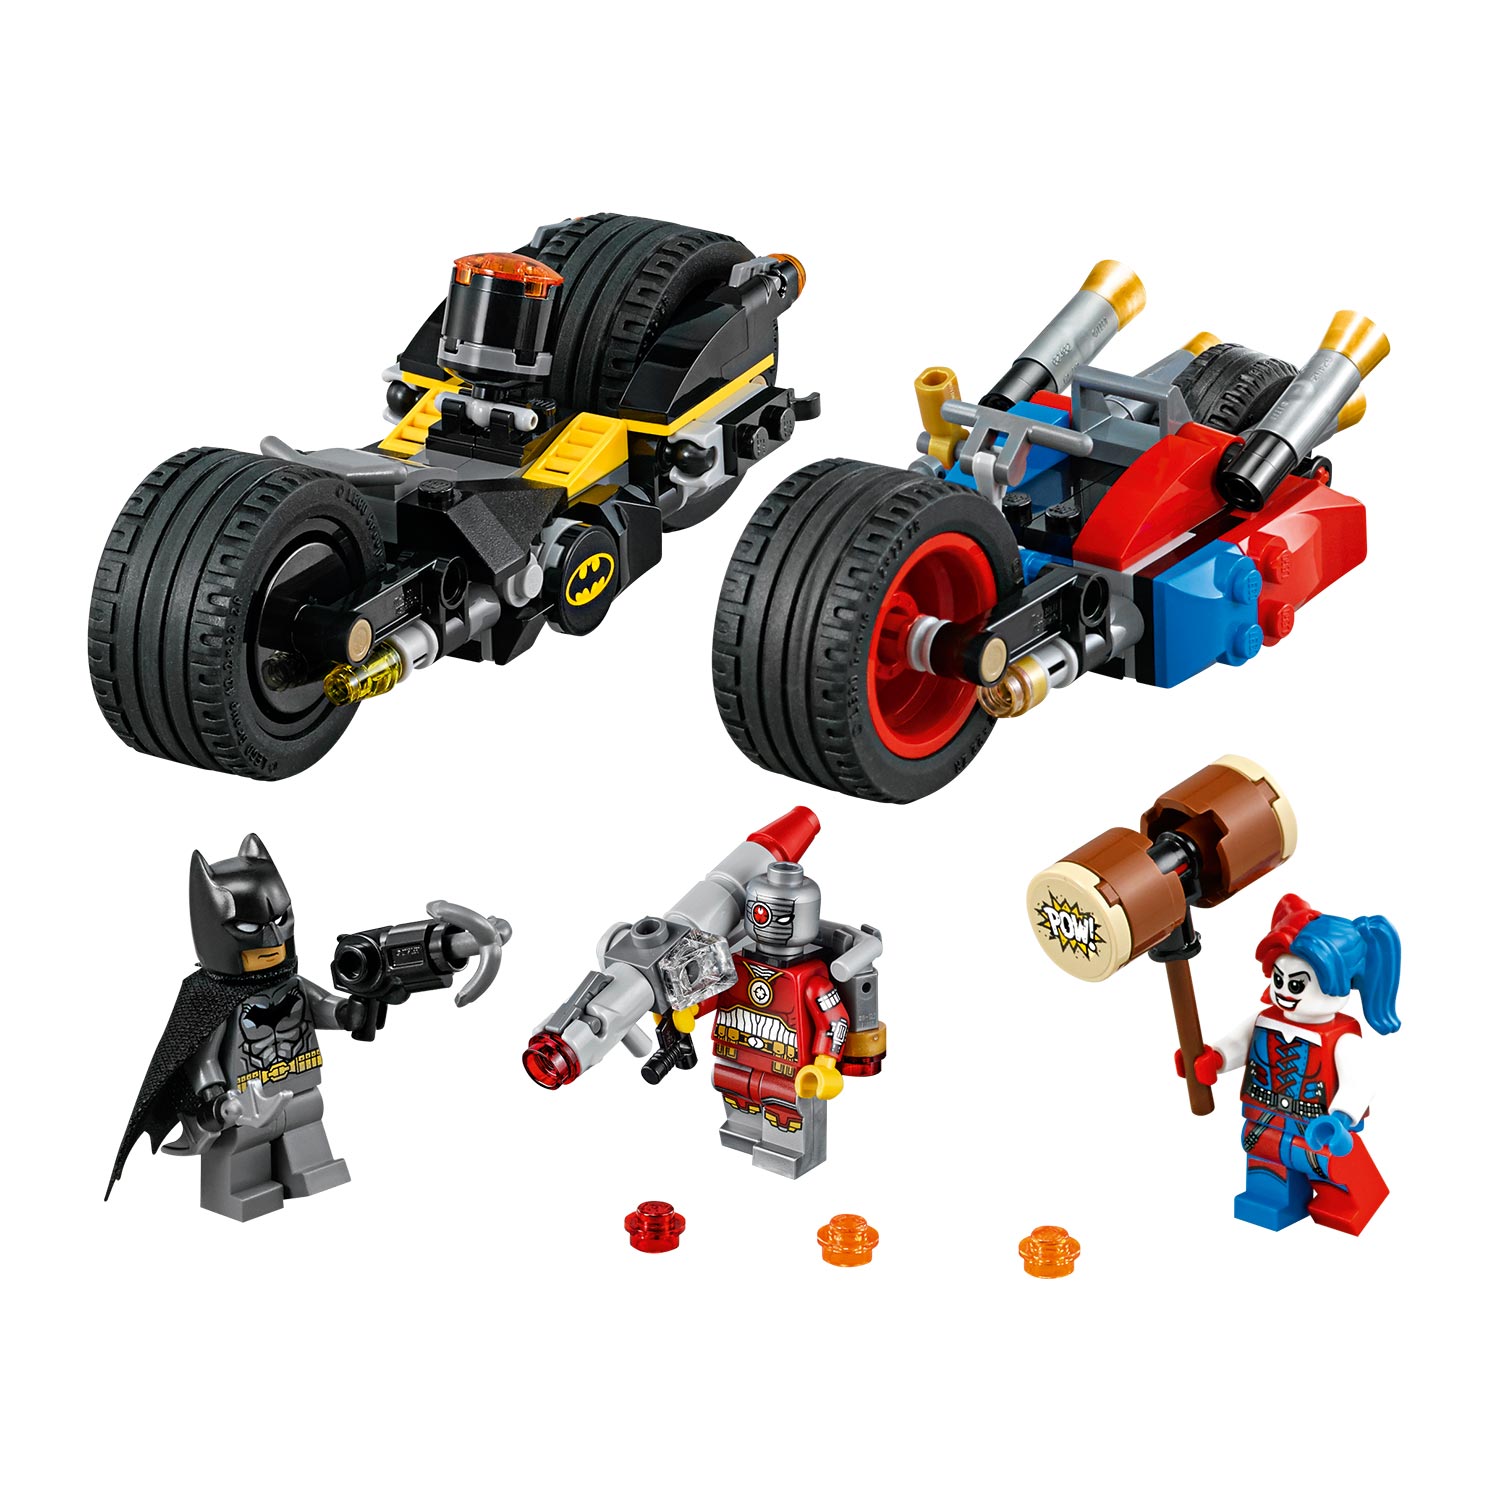 LEGO Super Heroes 76053 Batman: Gotham City motorjacht